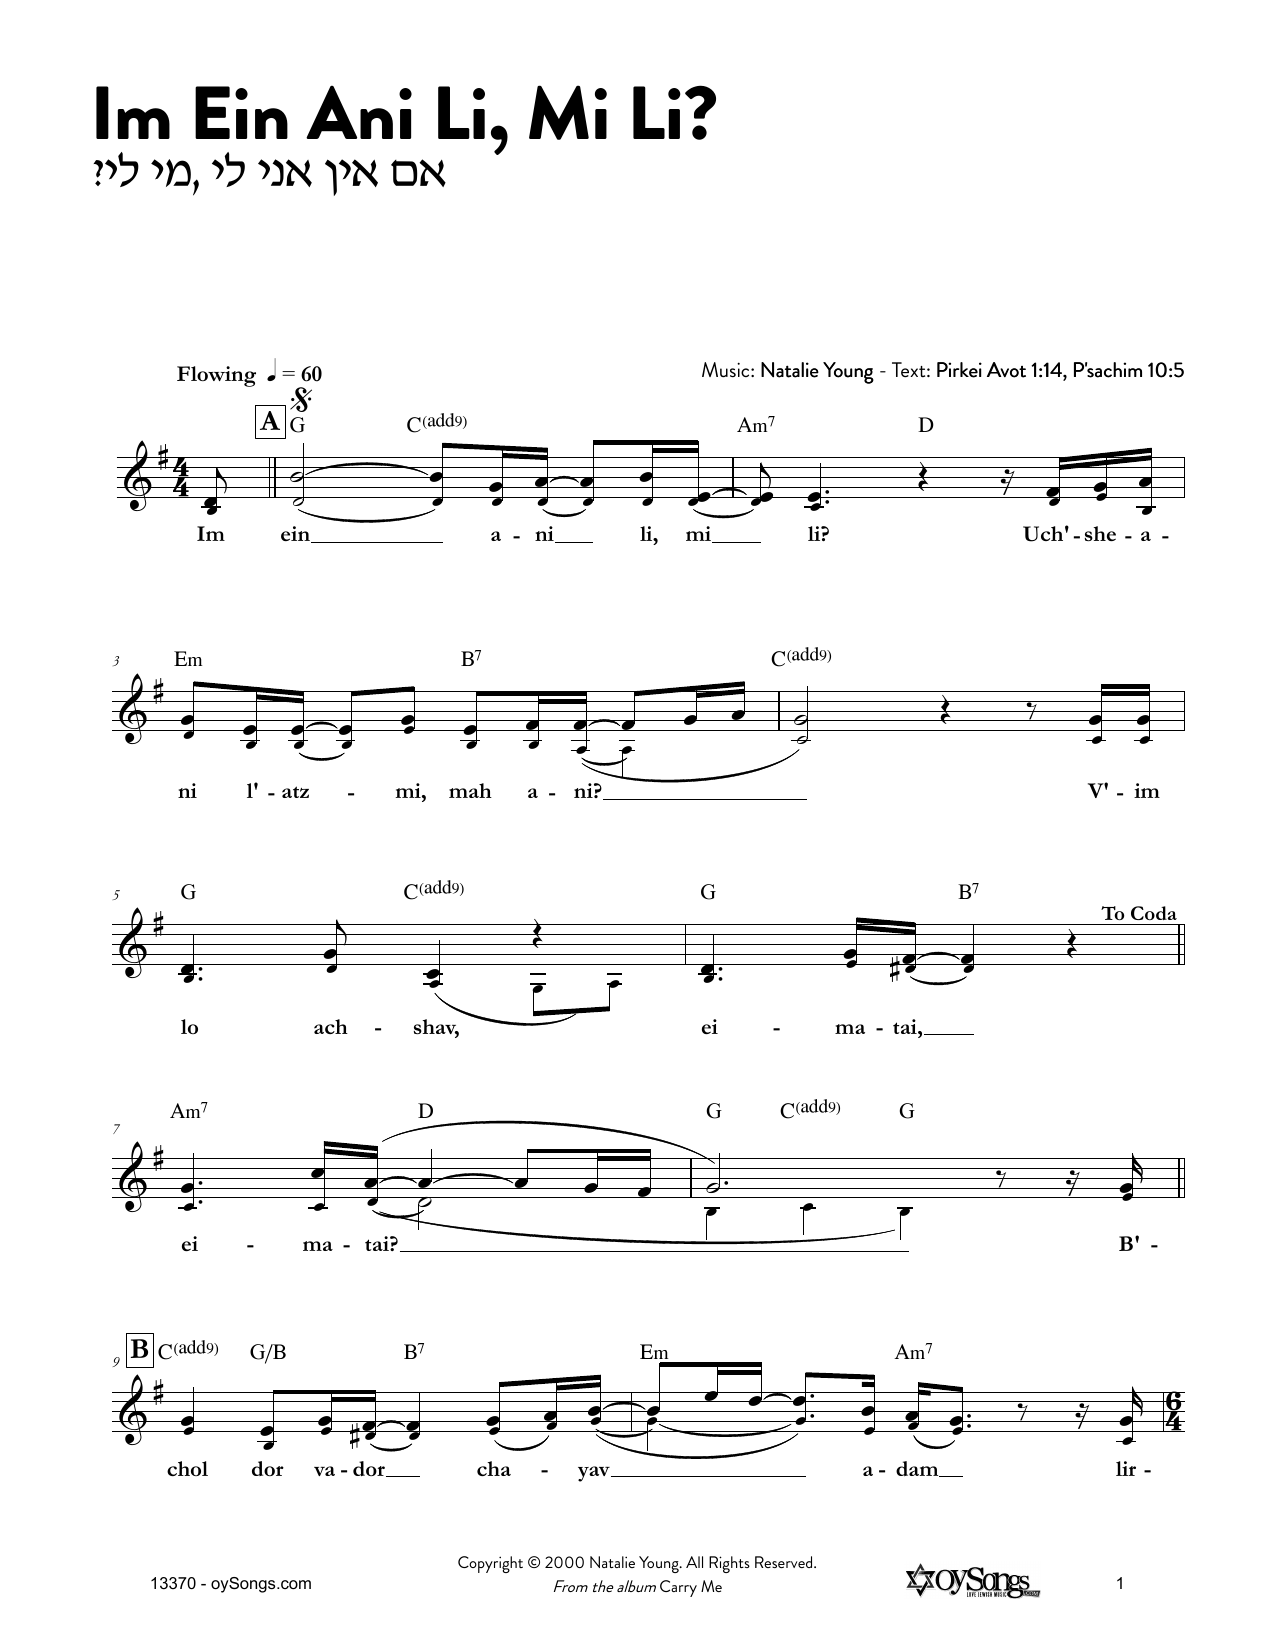 Natalie Young Im Ein Ani Li Mi Li Sheet Music Notes & Chords for Melody Line, Lyrics & Chords - Download or Print PDF